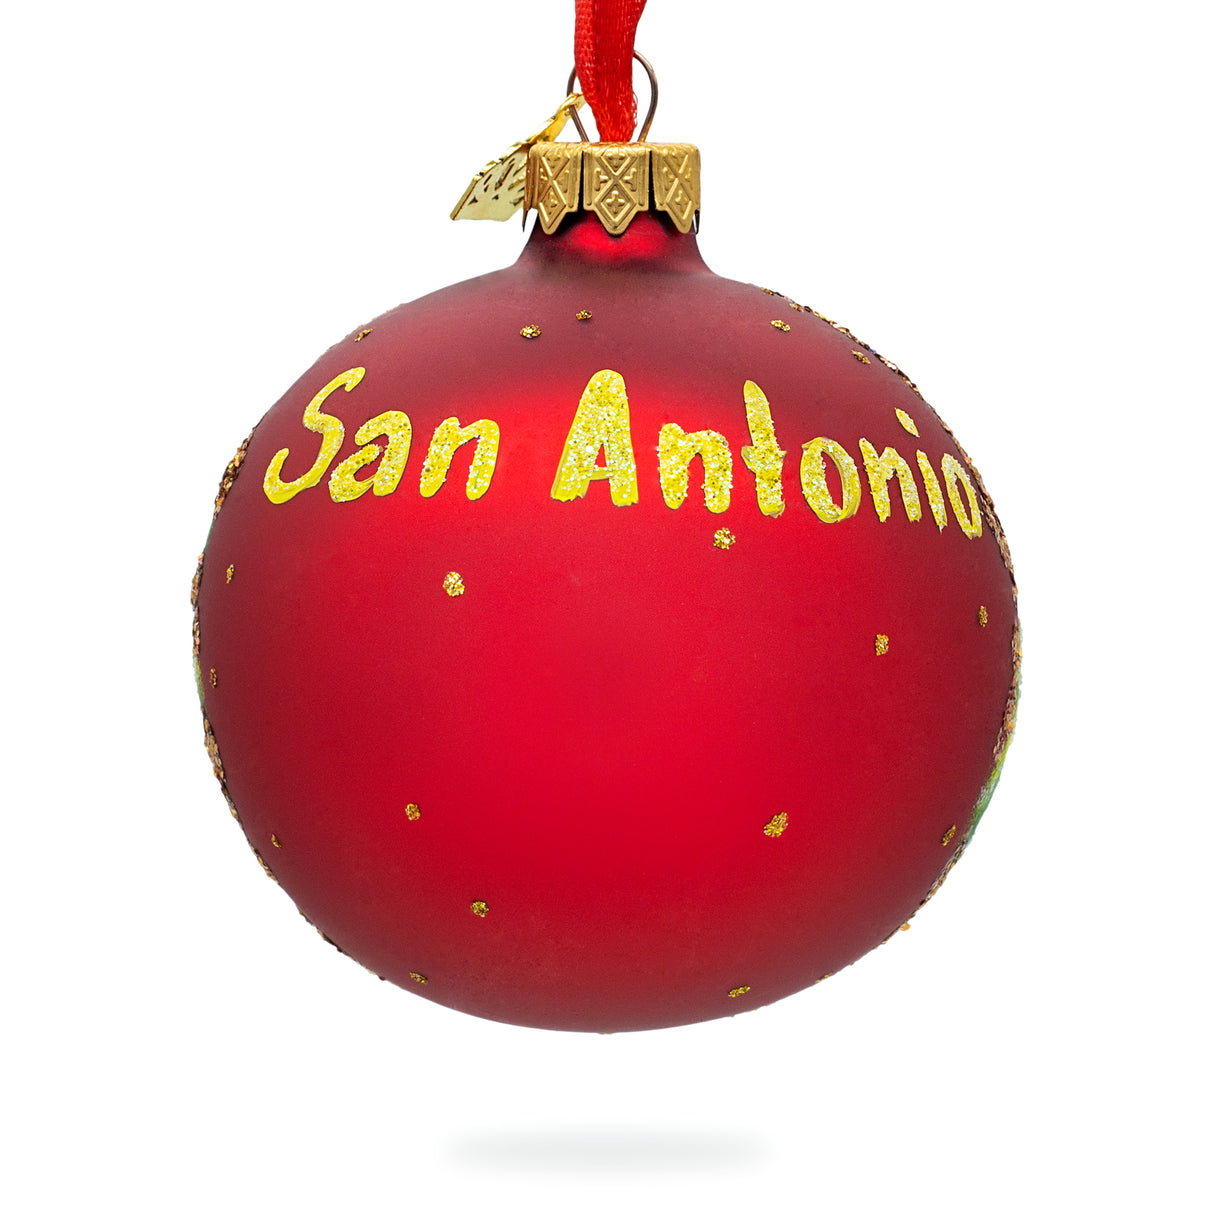 Buy Christmas Ornaments > Travel > North America > USA > California > The Alamo by BestPysanky Online Gift Ship